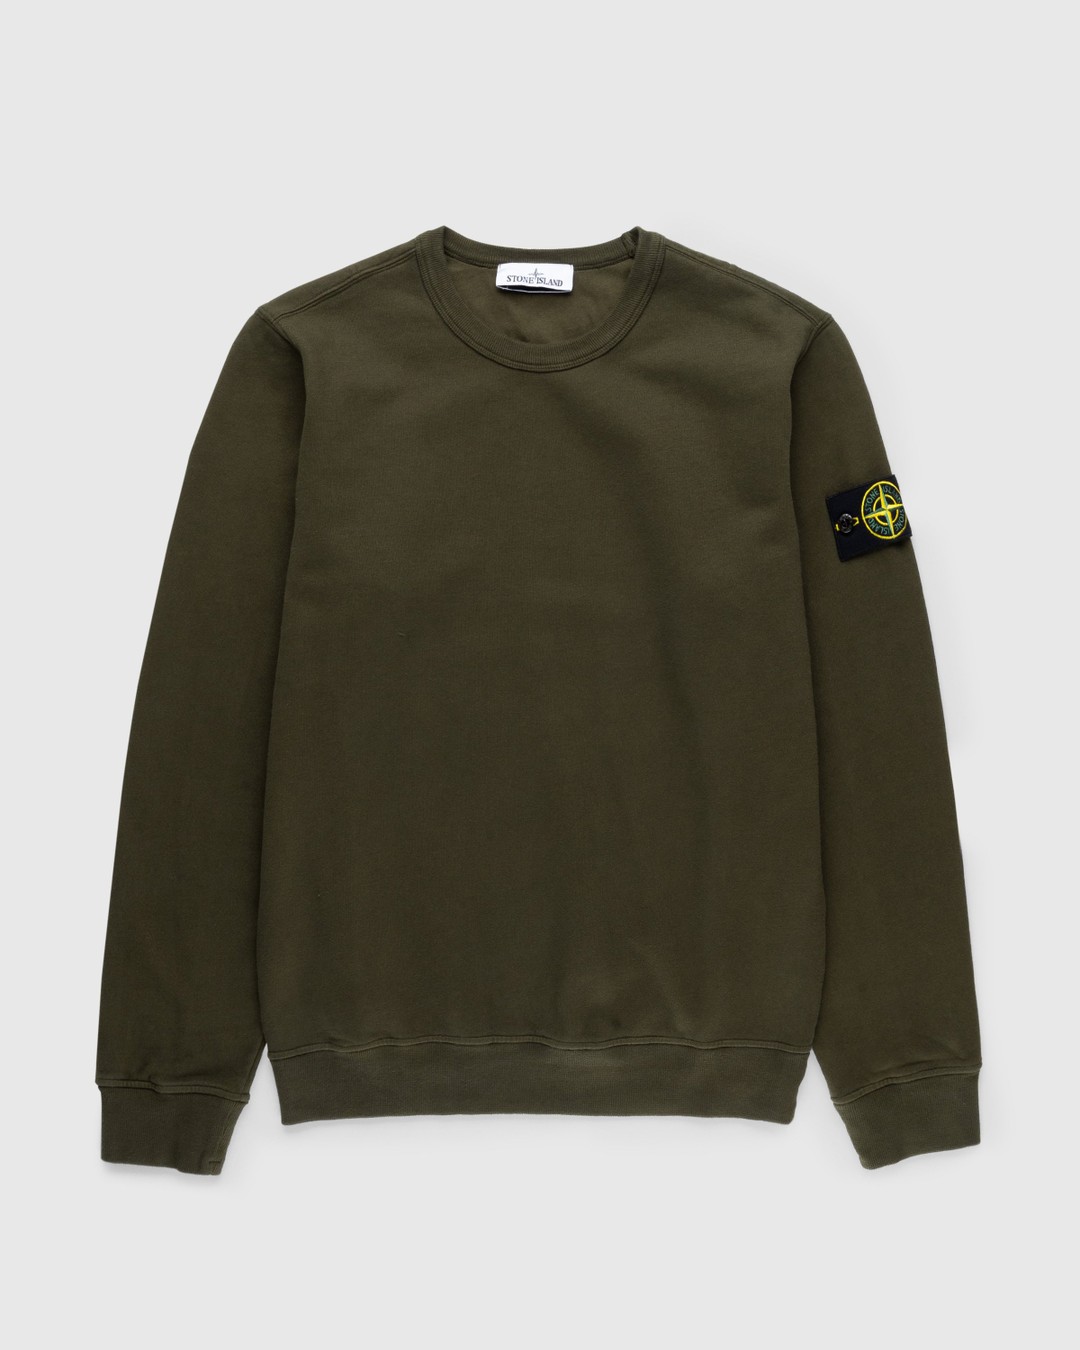 Stone Island – Garment-Dyed Brushed Fleece Crewneck Olive - Knitwear - Green - Image 1